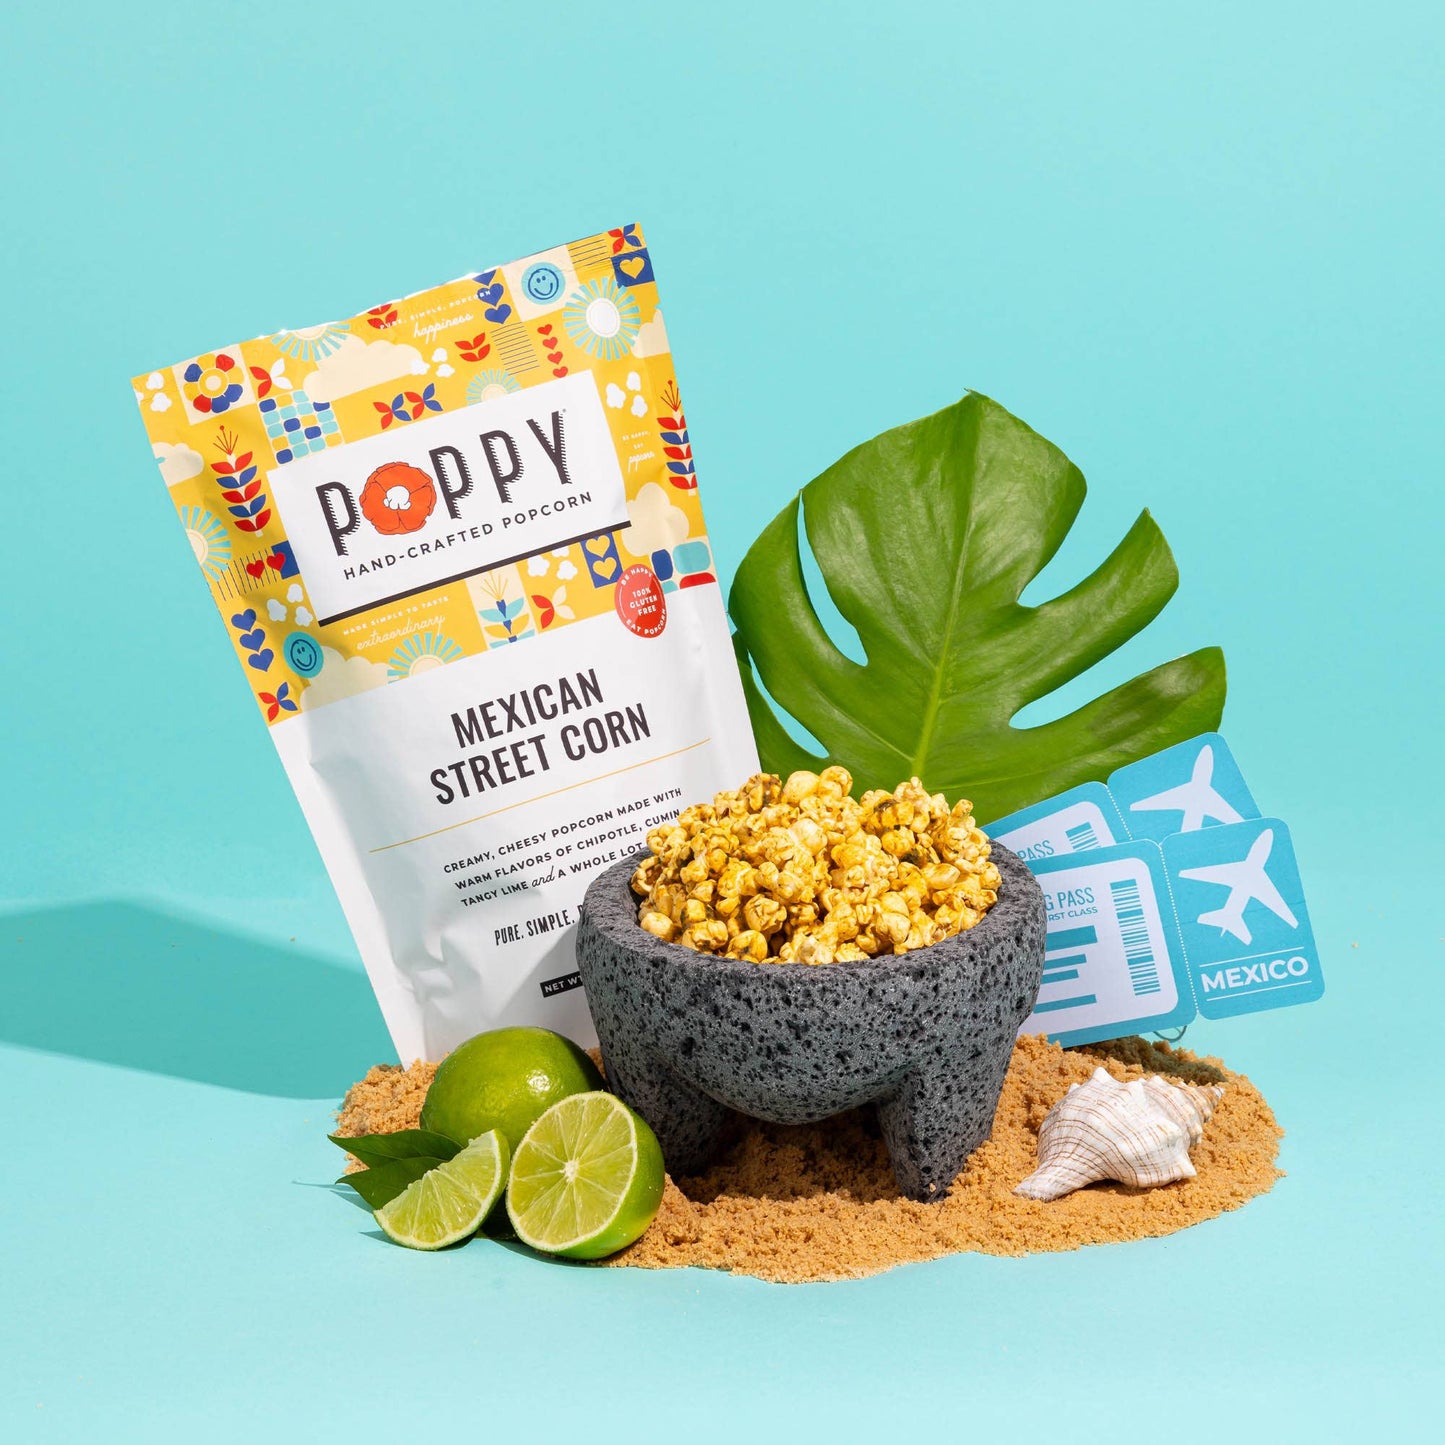 Poppy Hand-Crafted Popcorn - Mexican Street Corn Popcorn